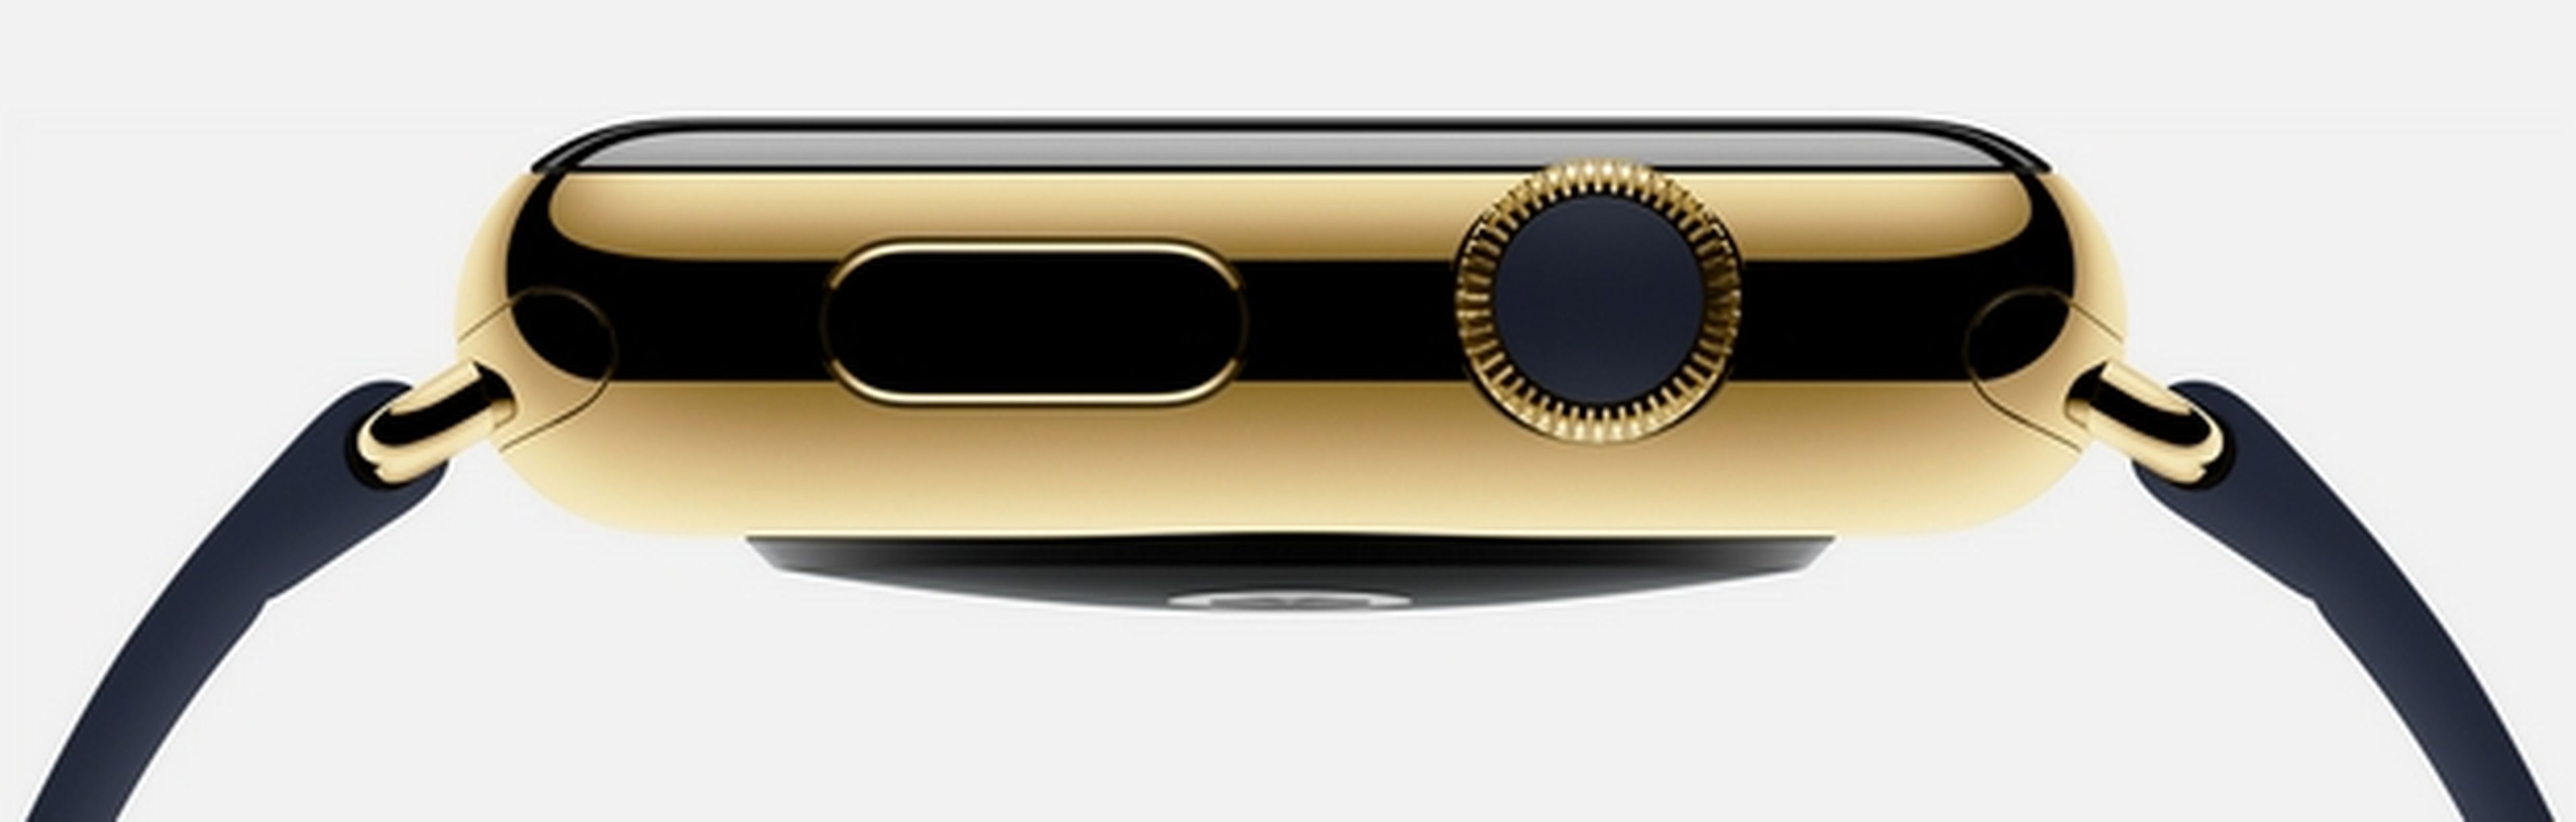 Apple Watch Edition Oro de 18 kilates